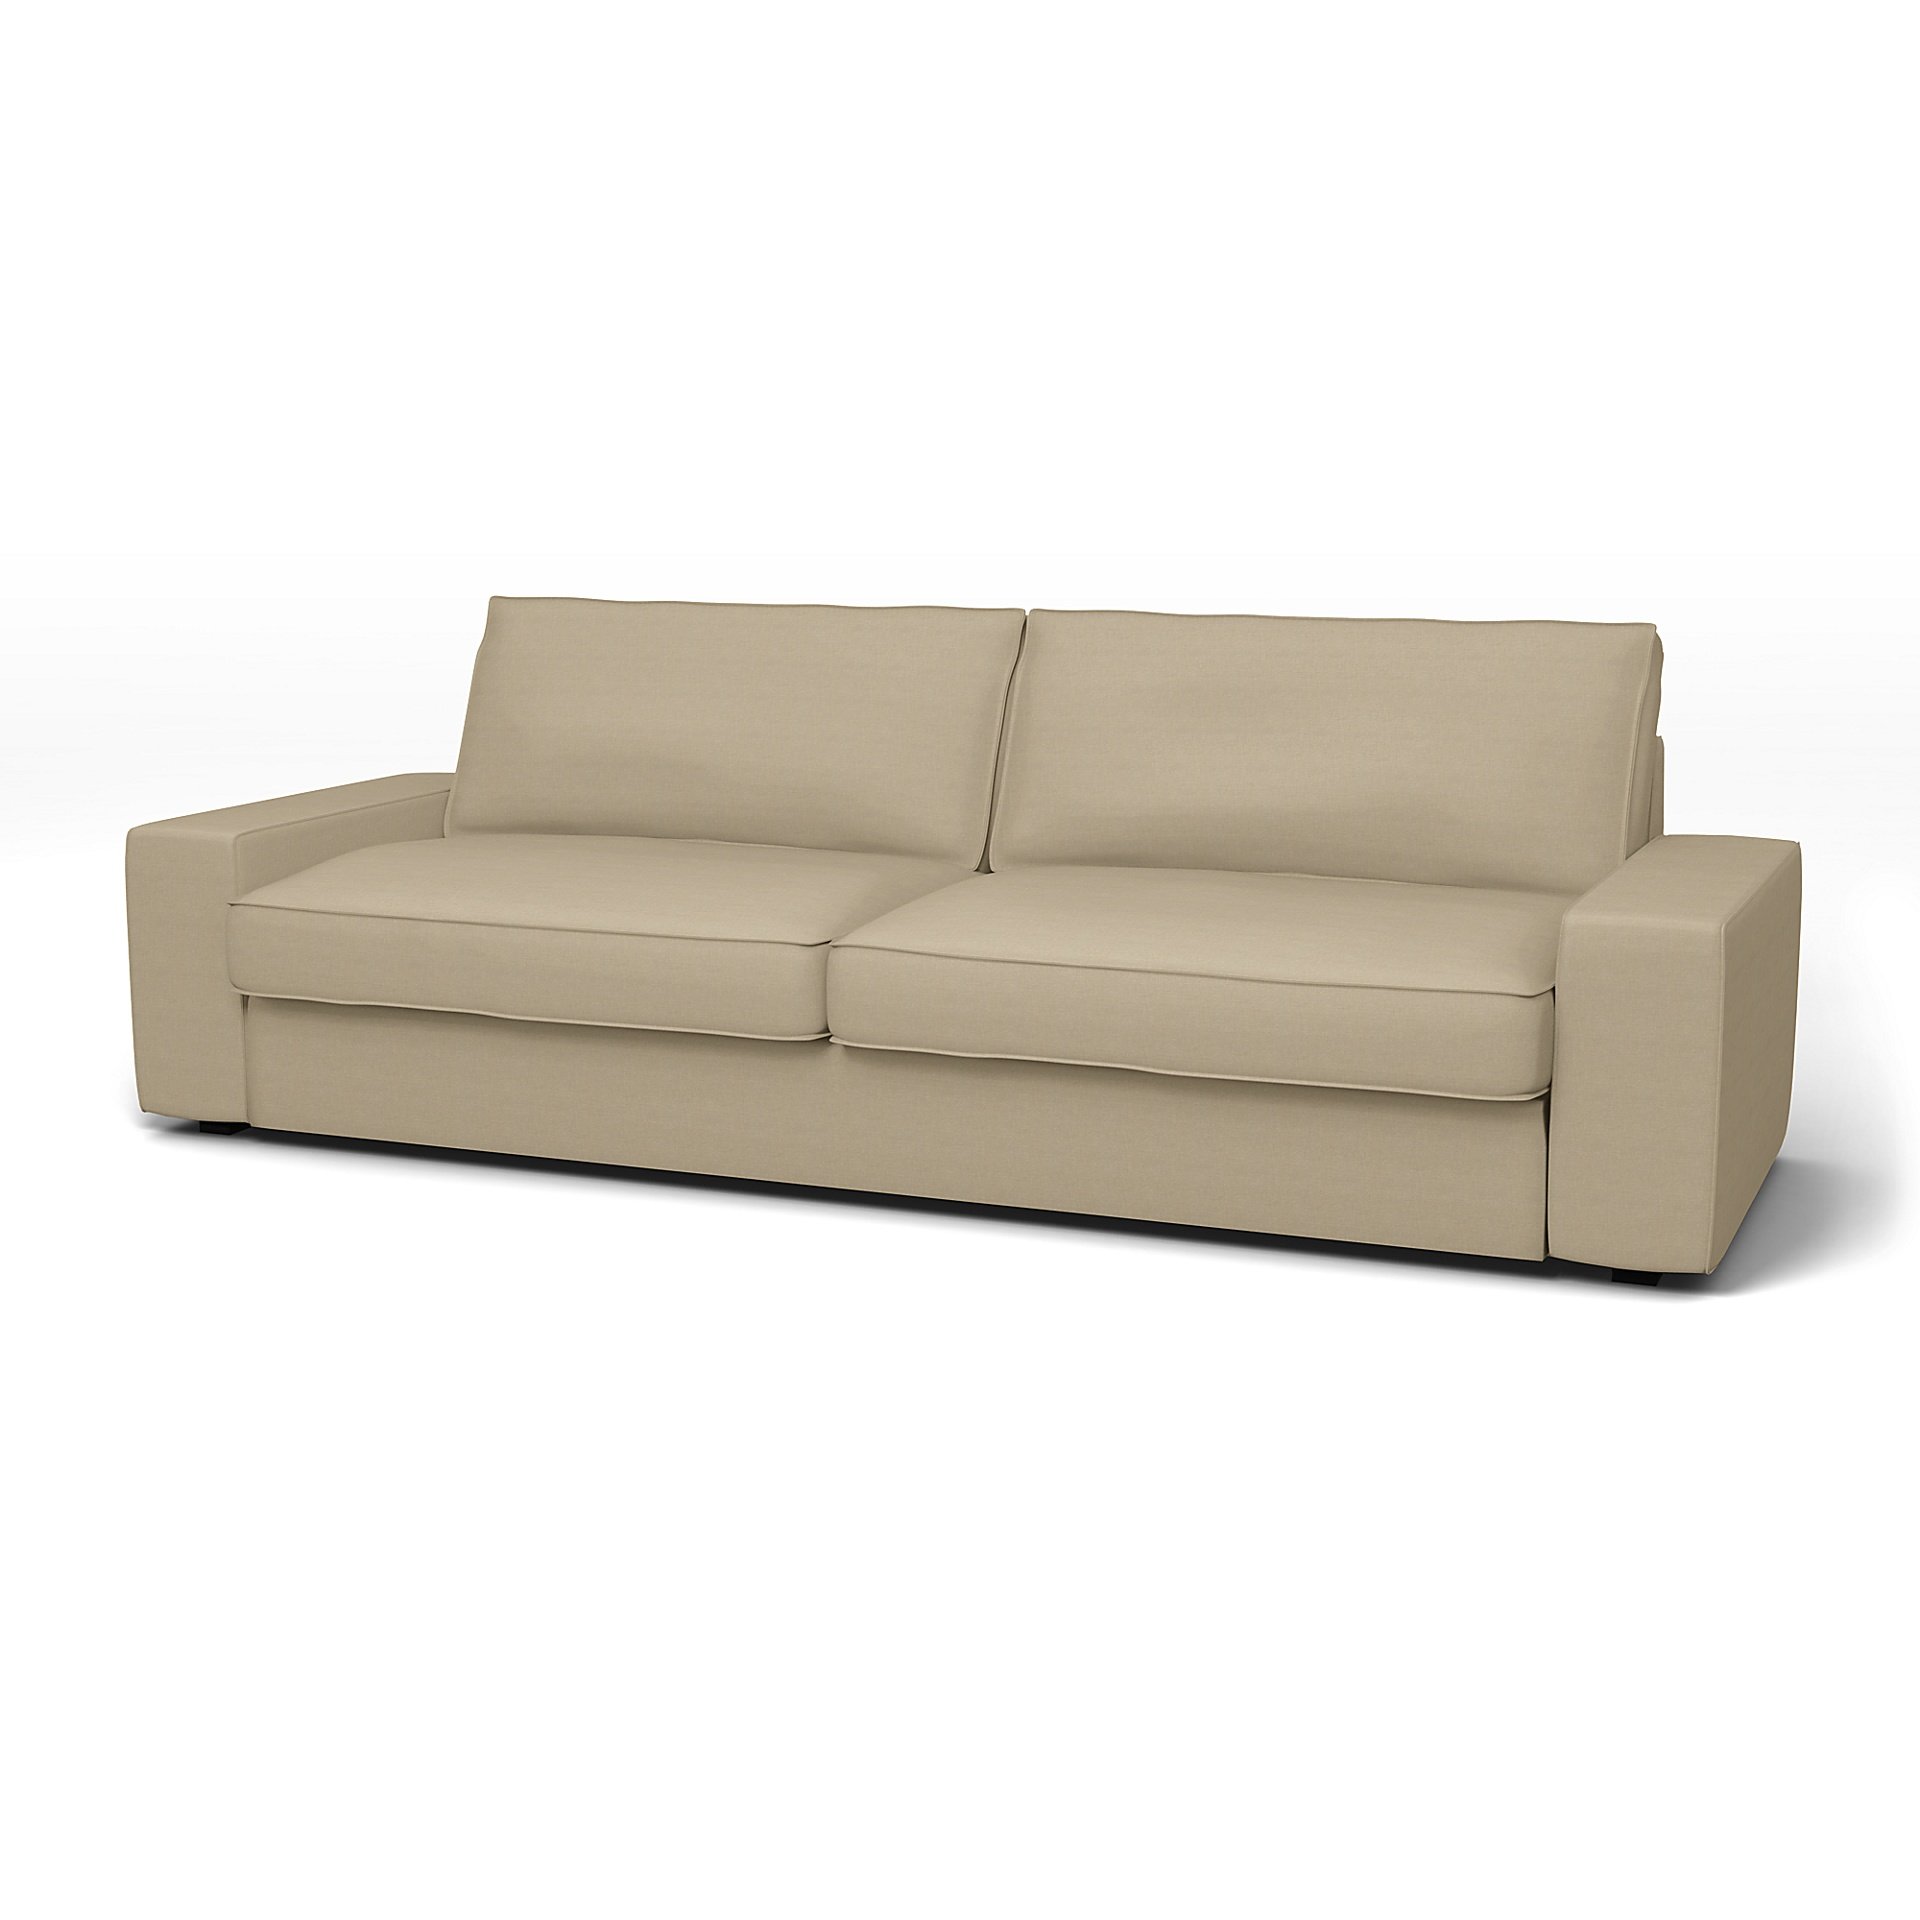 IKEA - Kivik Sofa Bed Cover, Tan, Linen - Bemz